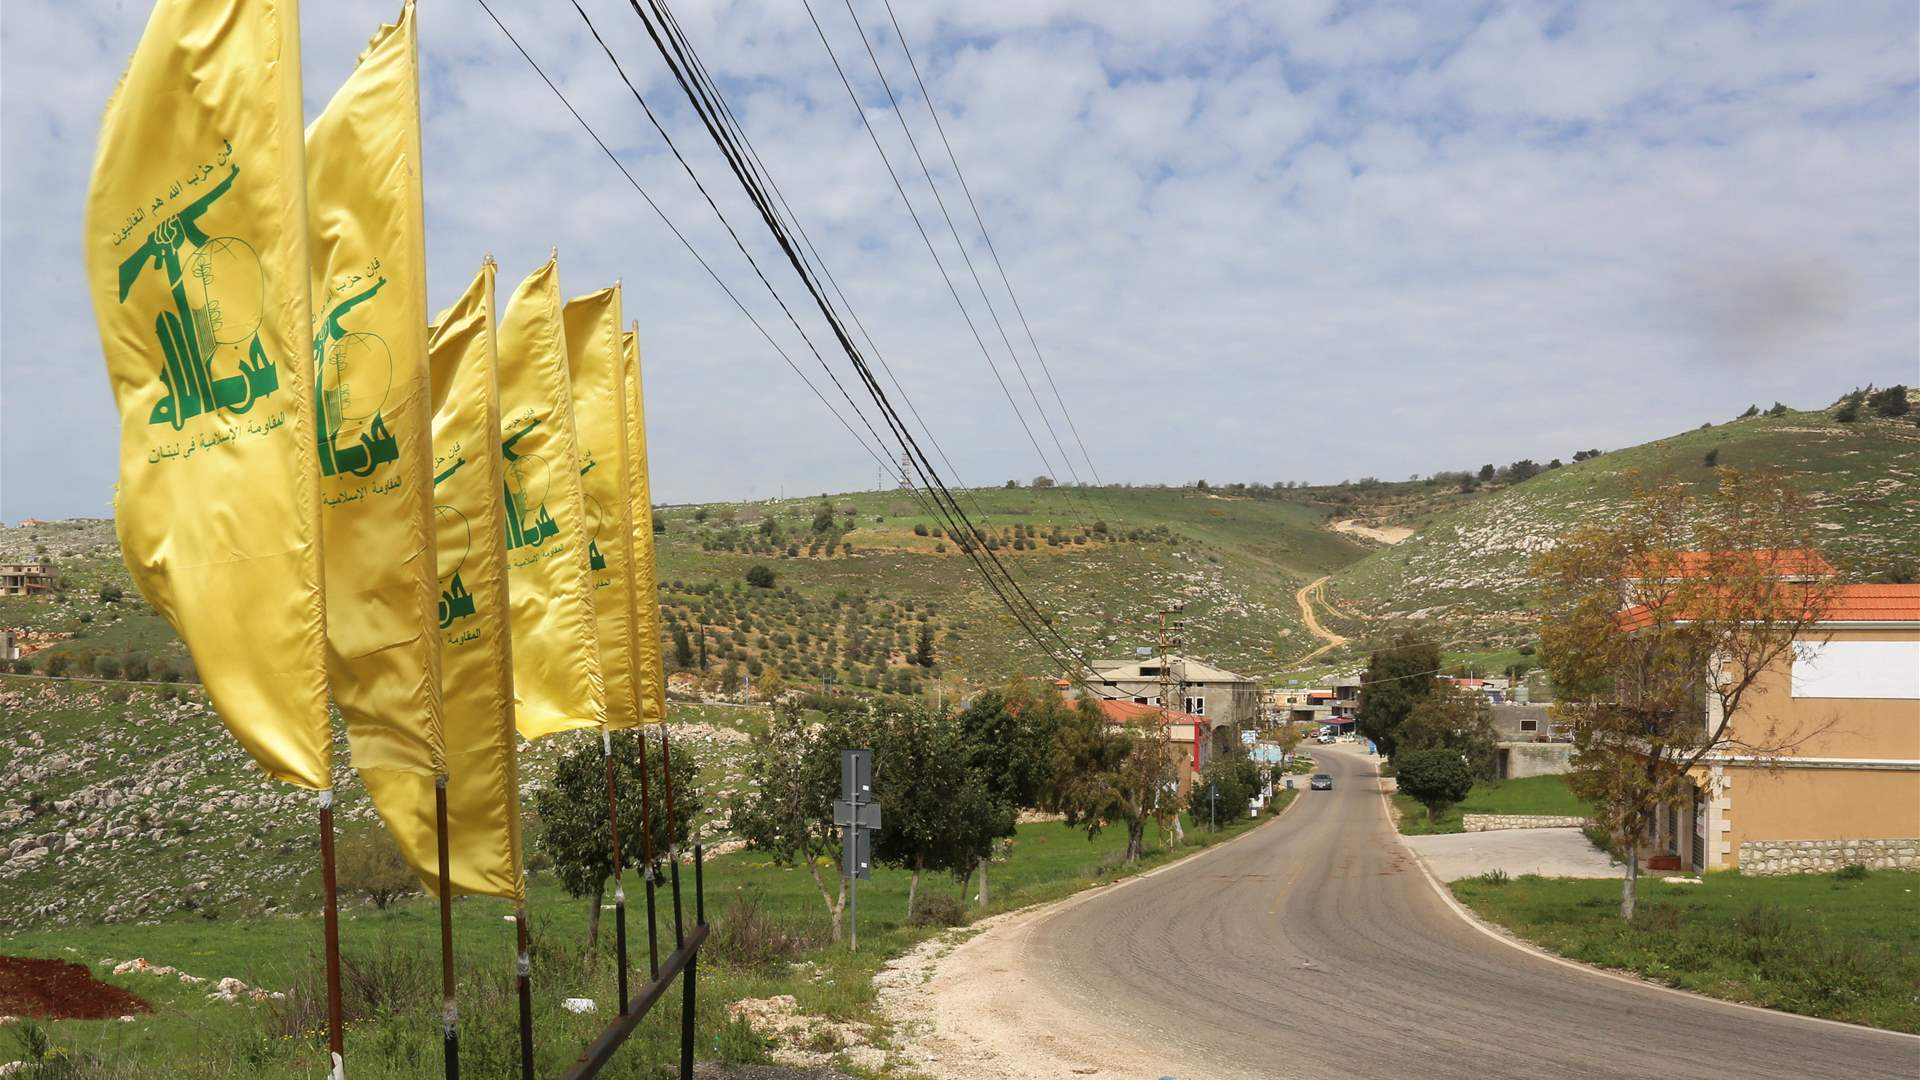 Hezbollah publishes video of targeting Israeli army sites in Jal al-Alam, Ras al-Naqoura